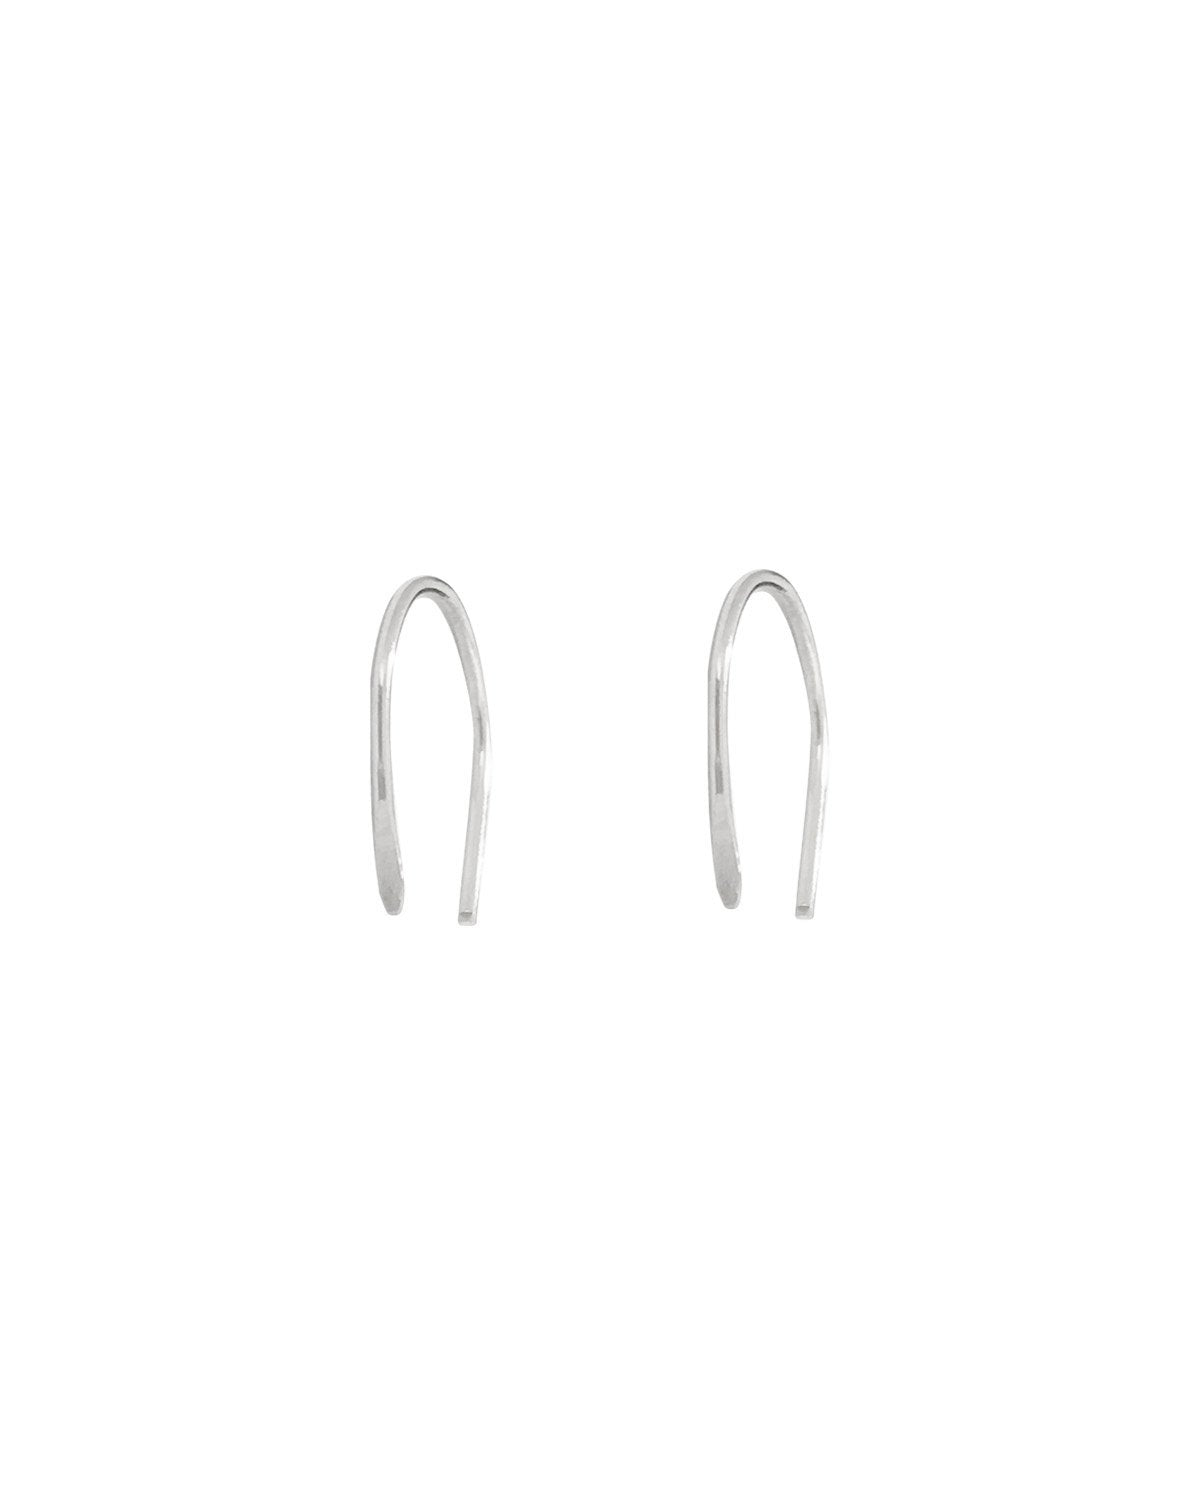 Handmade Arc Earrings in Sterling Silver